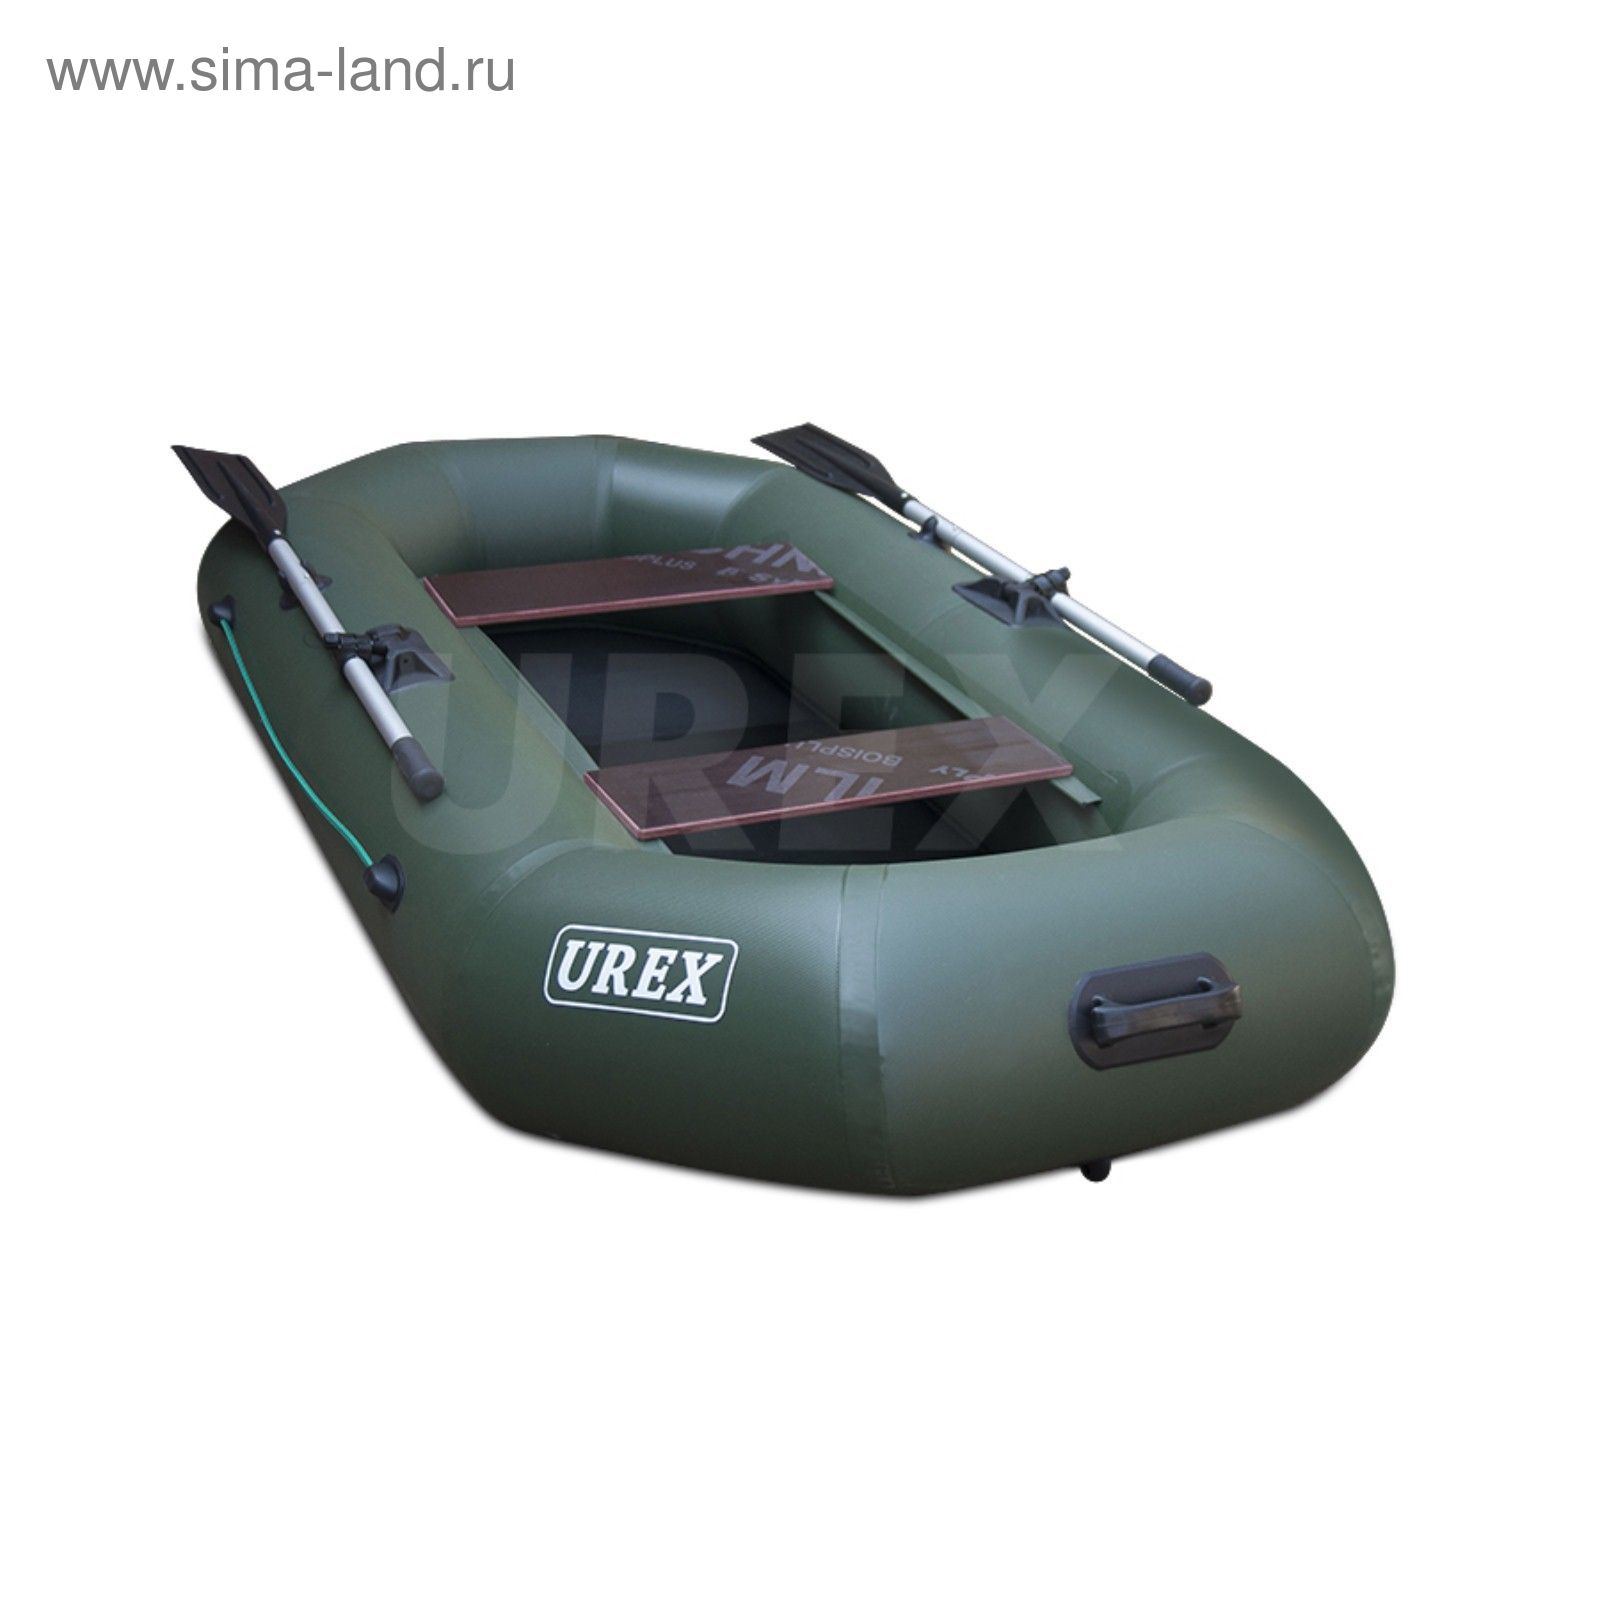 Лодка надувная моторная "UREX-240"